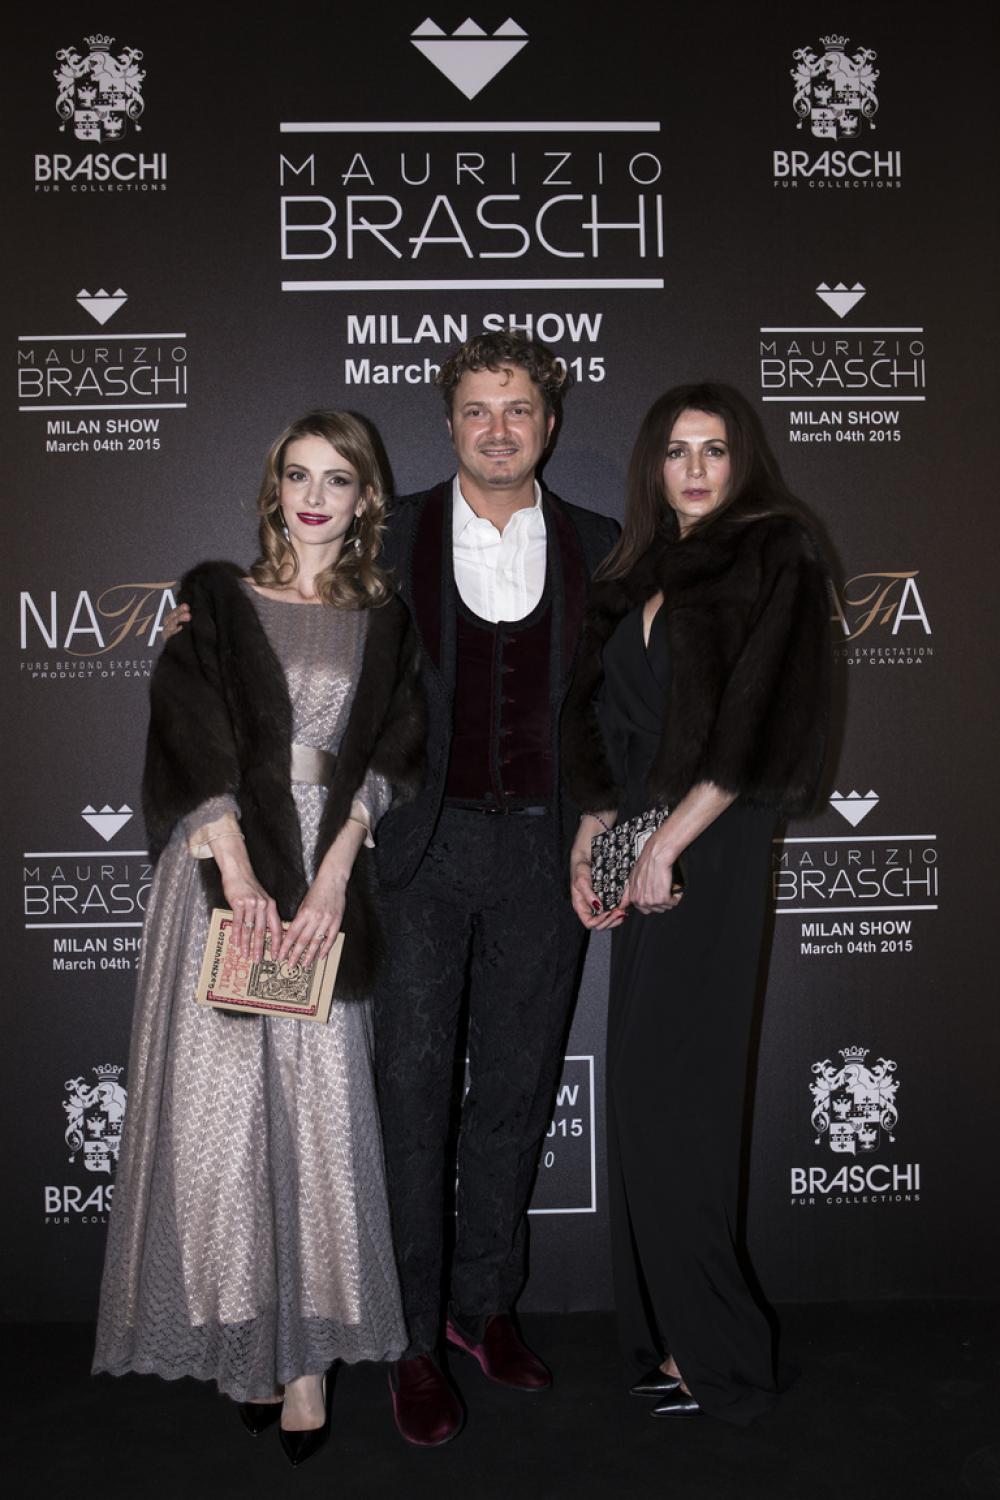 Ornella Muti and other stars at the Maurizio Braschi Fashion Show in Milan - March 2015